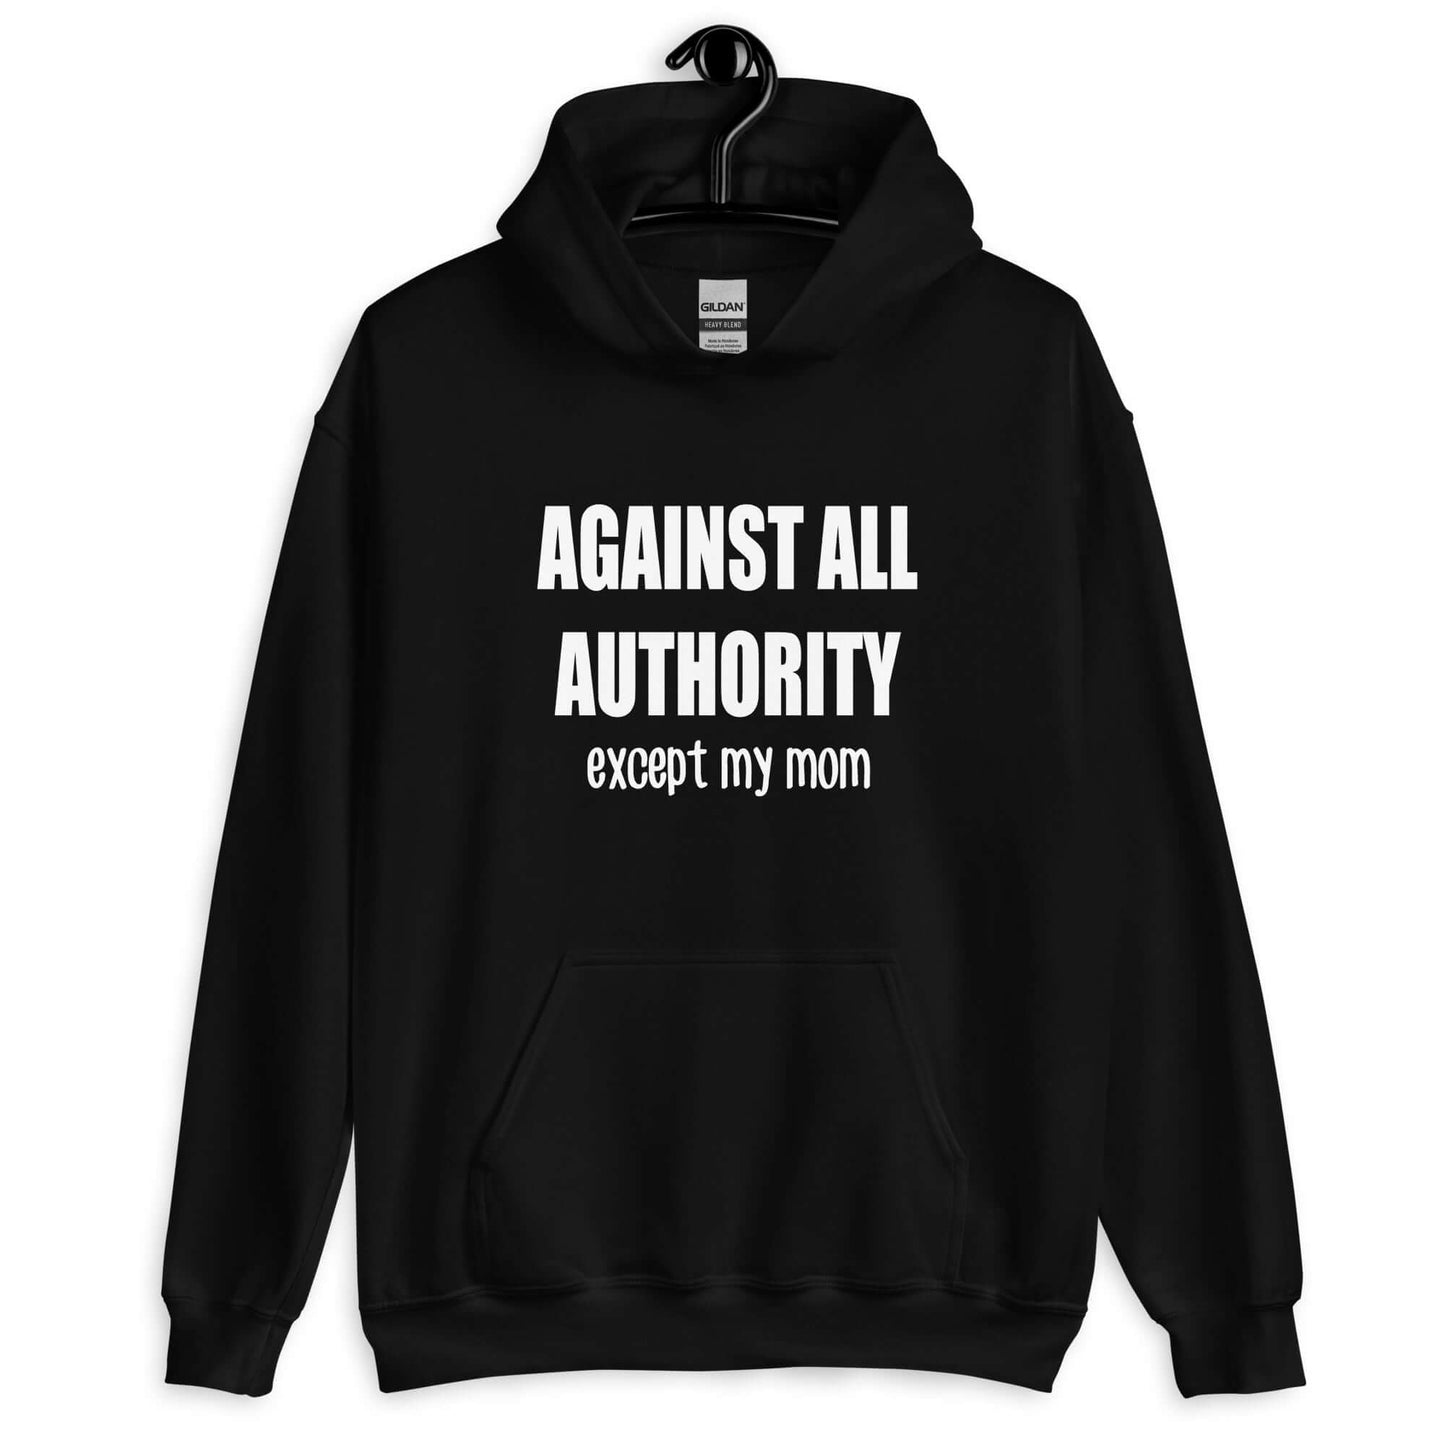 Against all authority except my mom hoodie sweatshirt